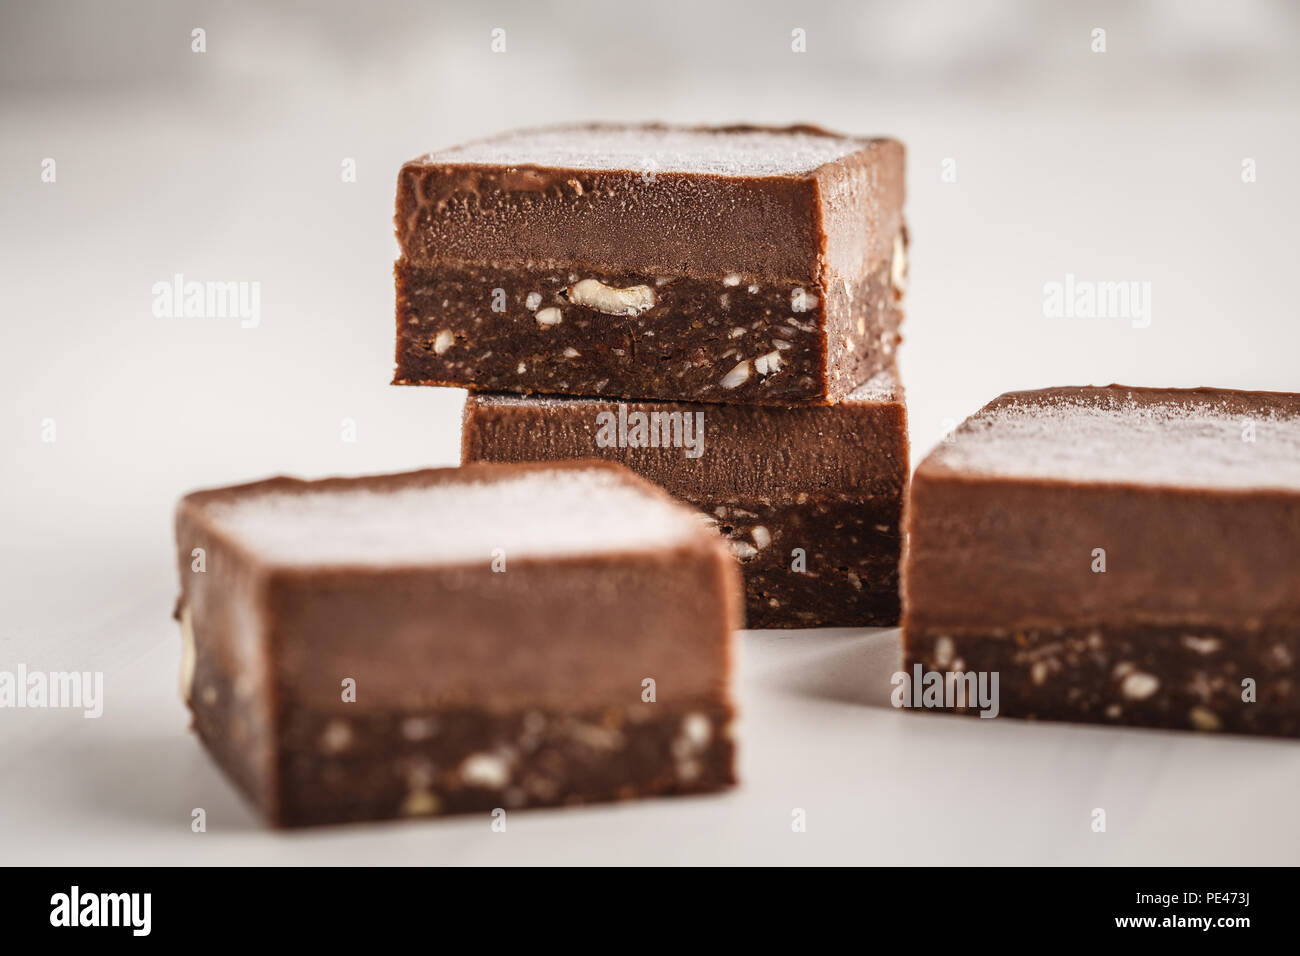 Chocolate fudge bars on white background. Clean eating concept. Raw vegan dessrt. Stock Photo